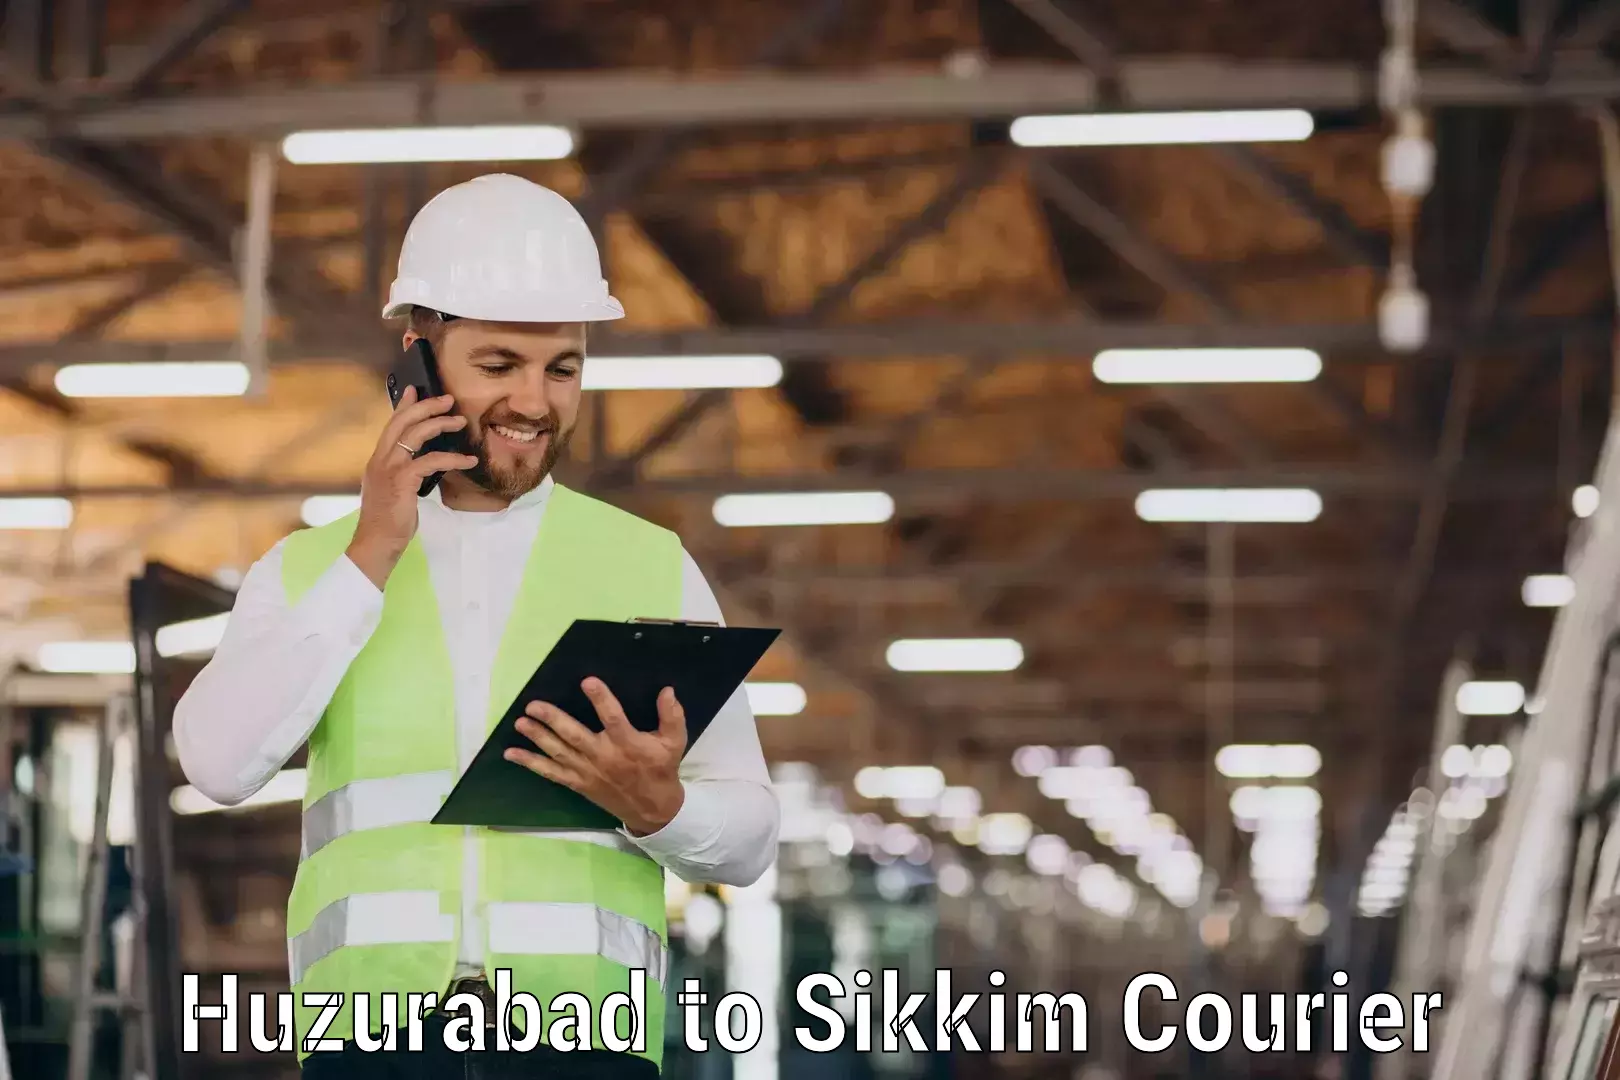 Courier service comparison Huzurabad to Sikkim